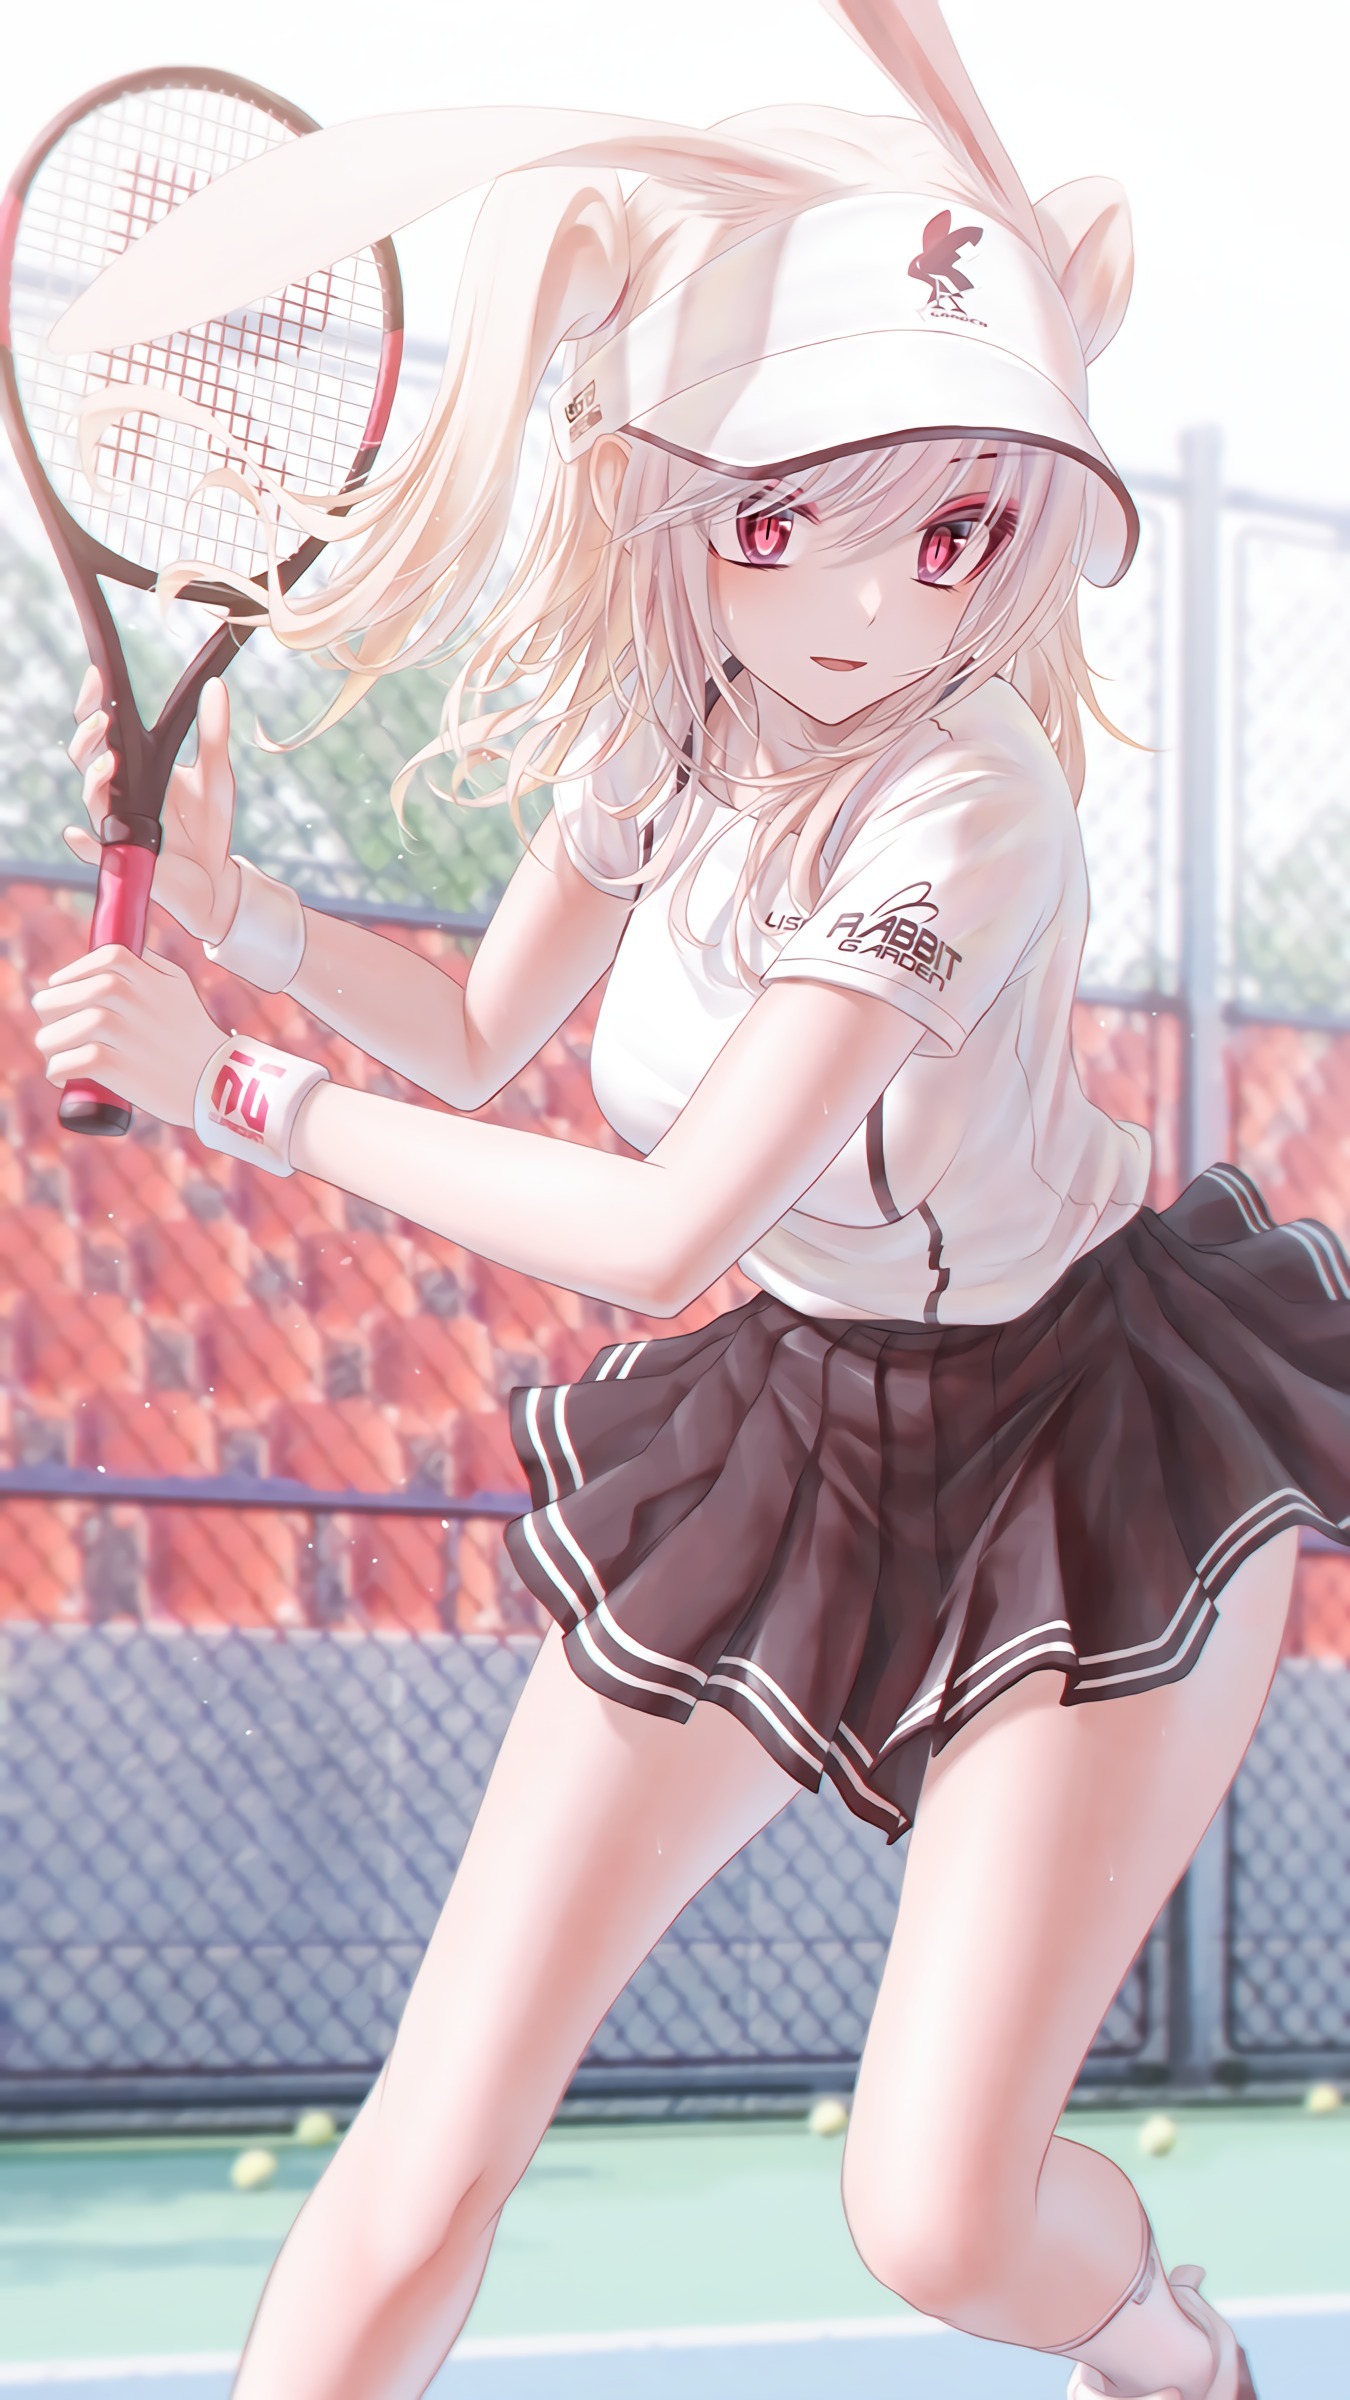 Anime 1350x2400 Bae.C anime girls portrait display bunny girl bunny ears tennis rackets tennis balls skirt